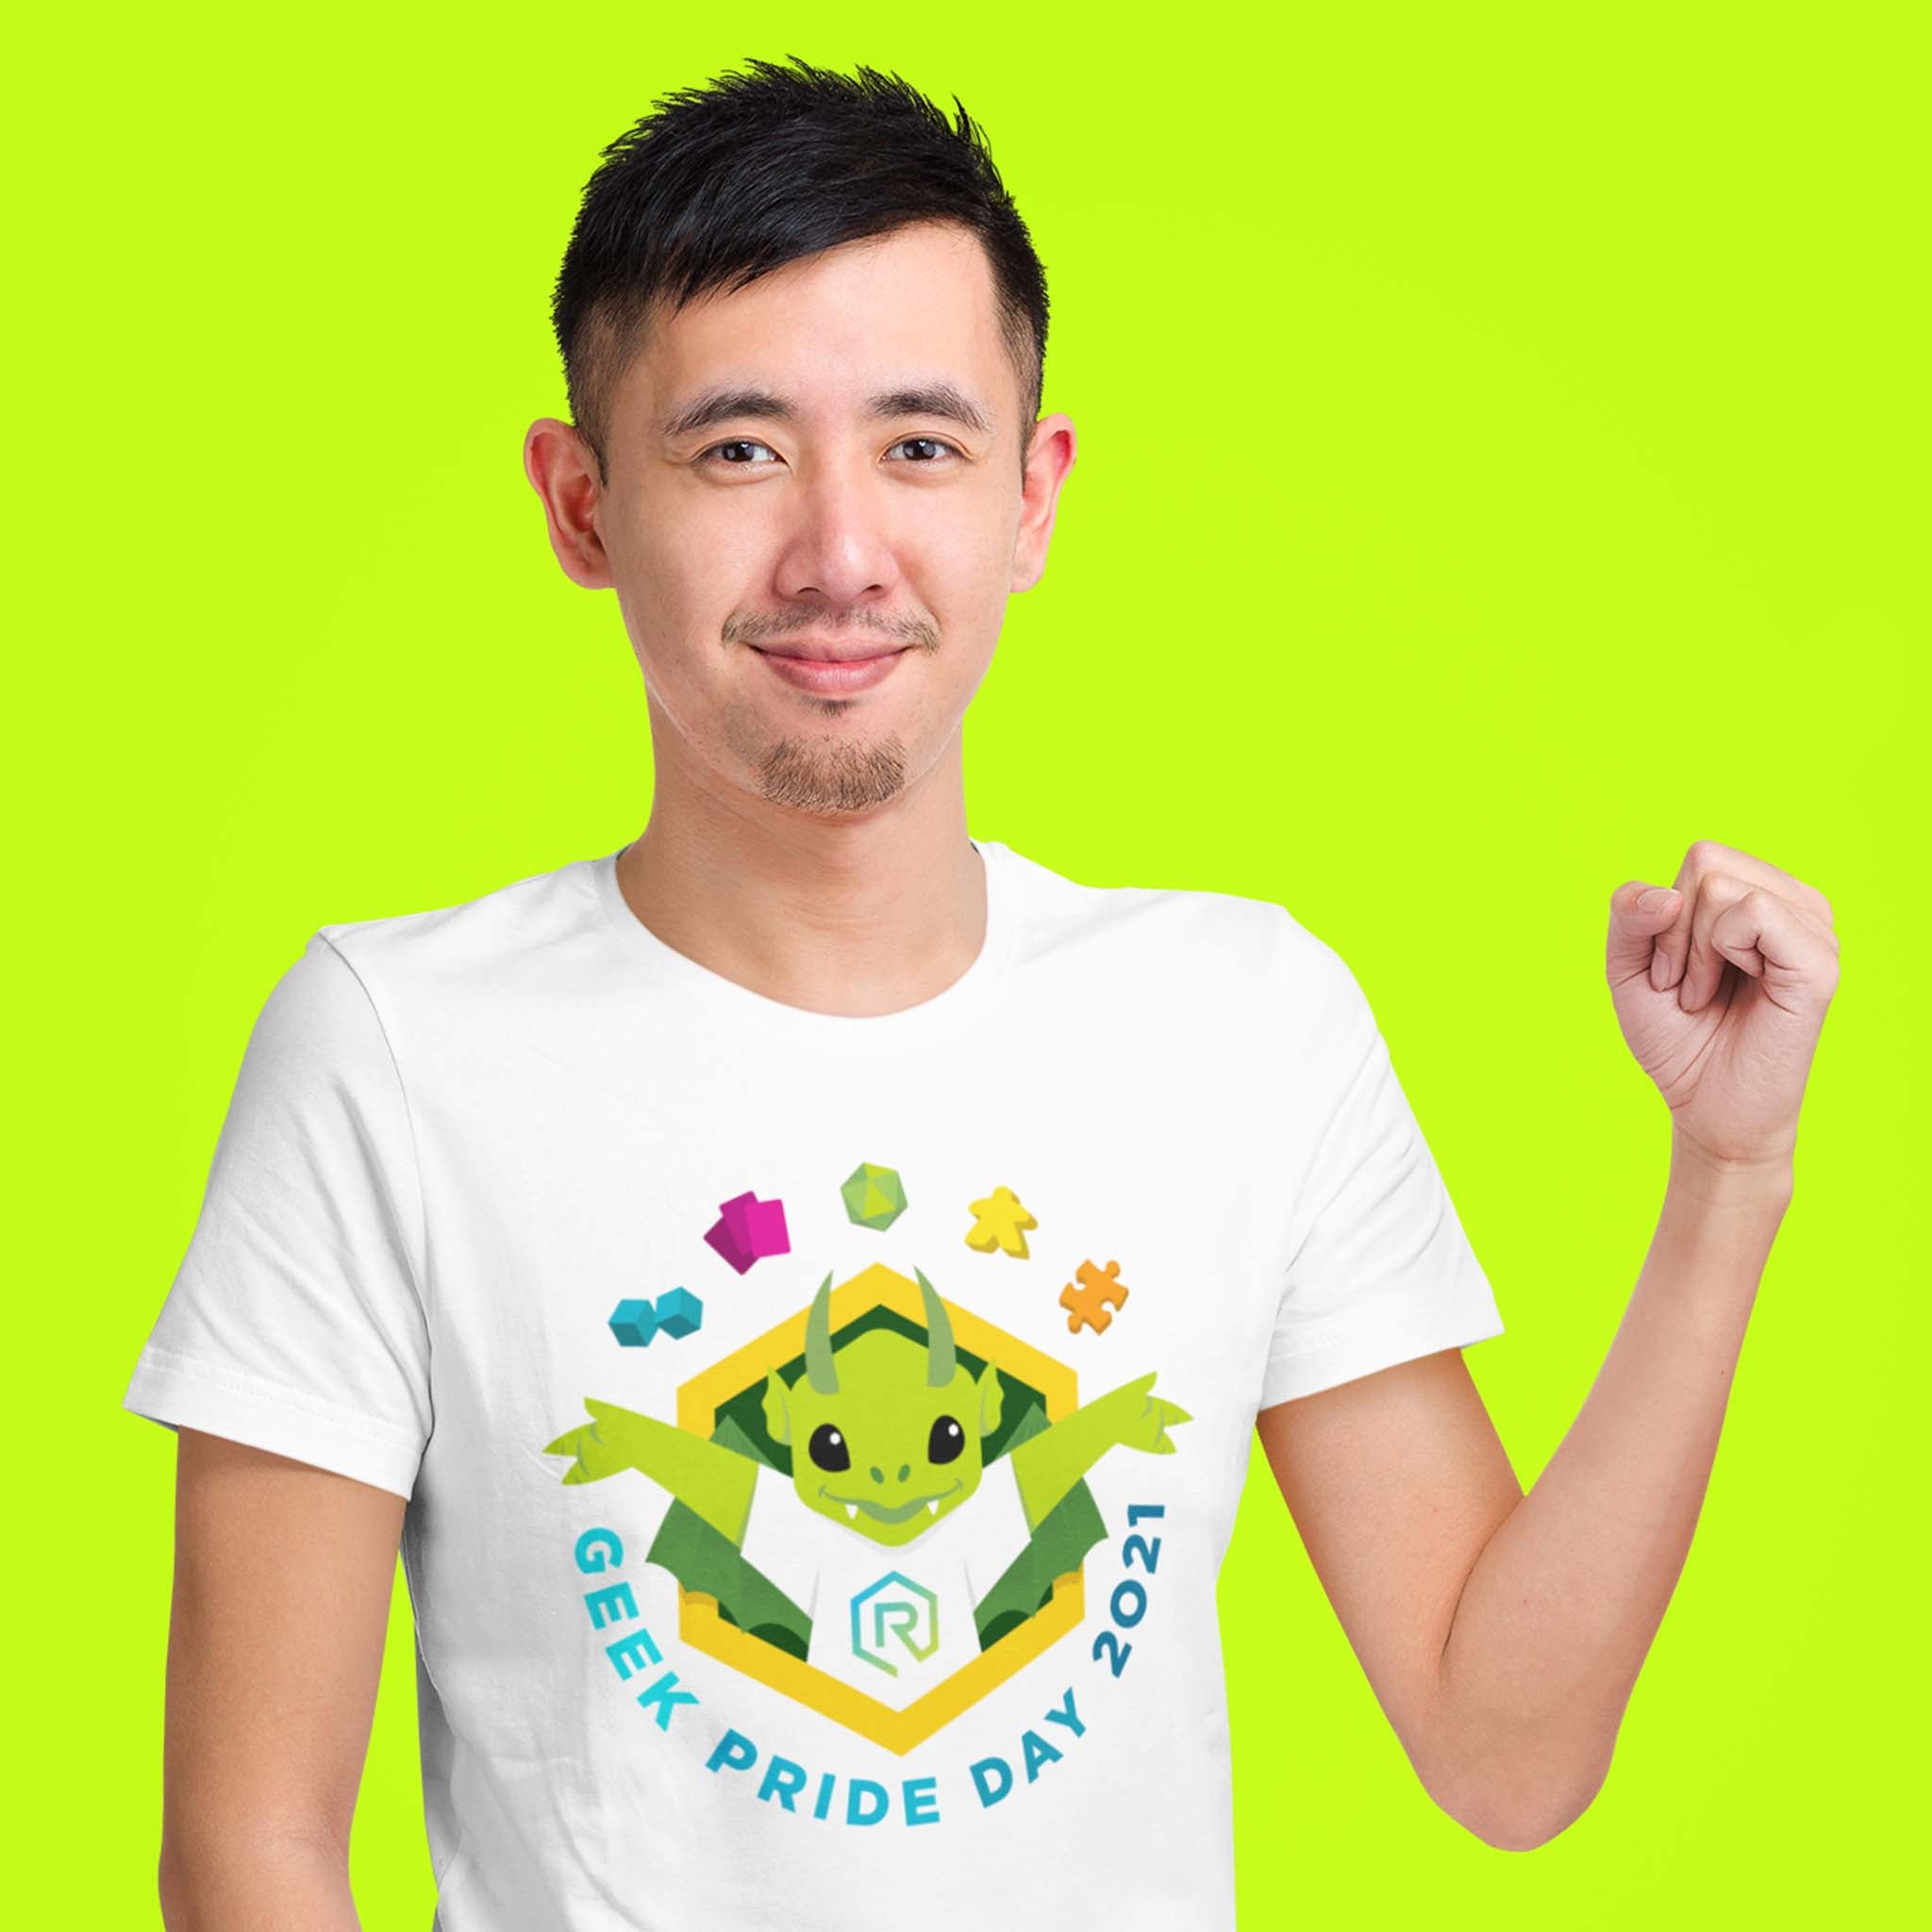 Geek Pride Day 2021 Shirt | Rollacrit